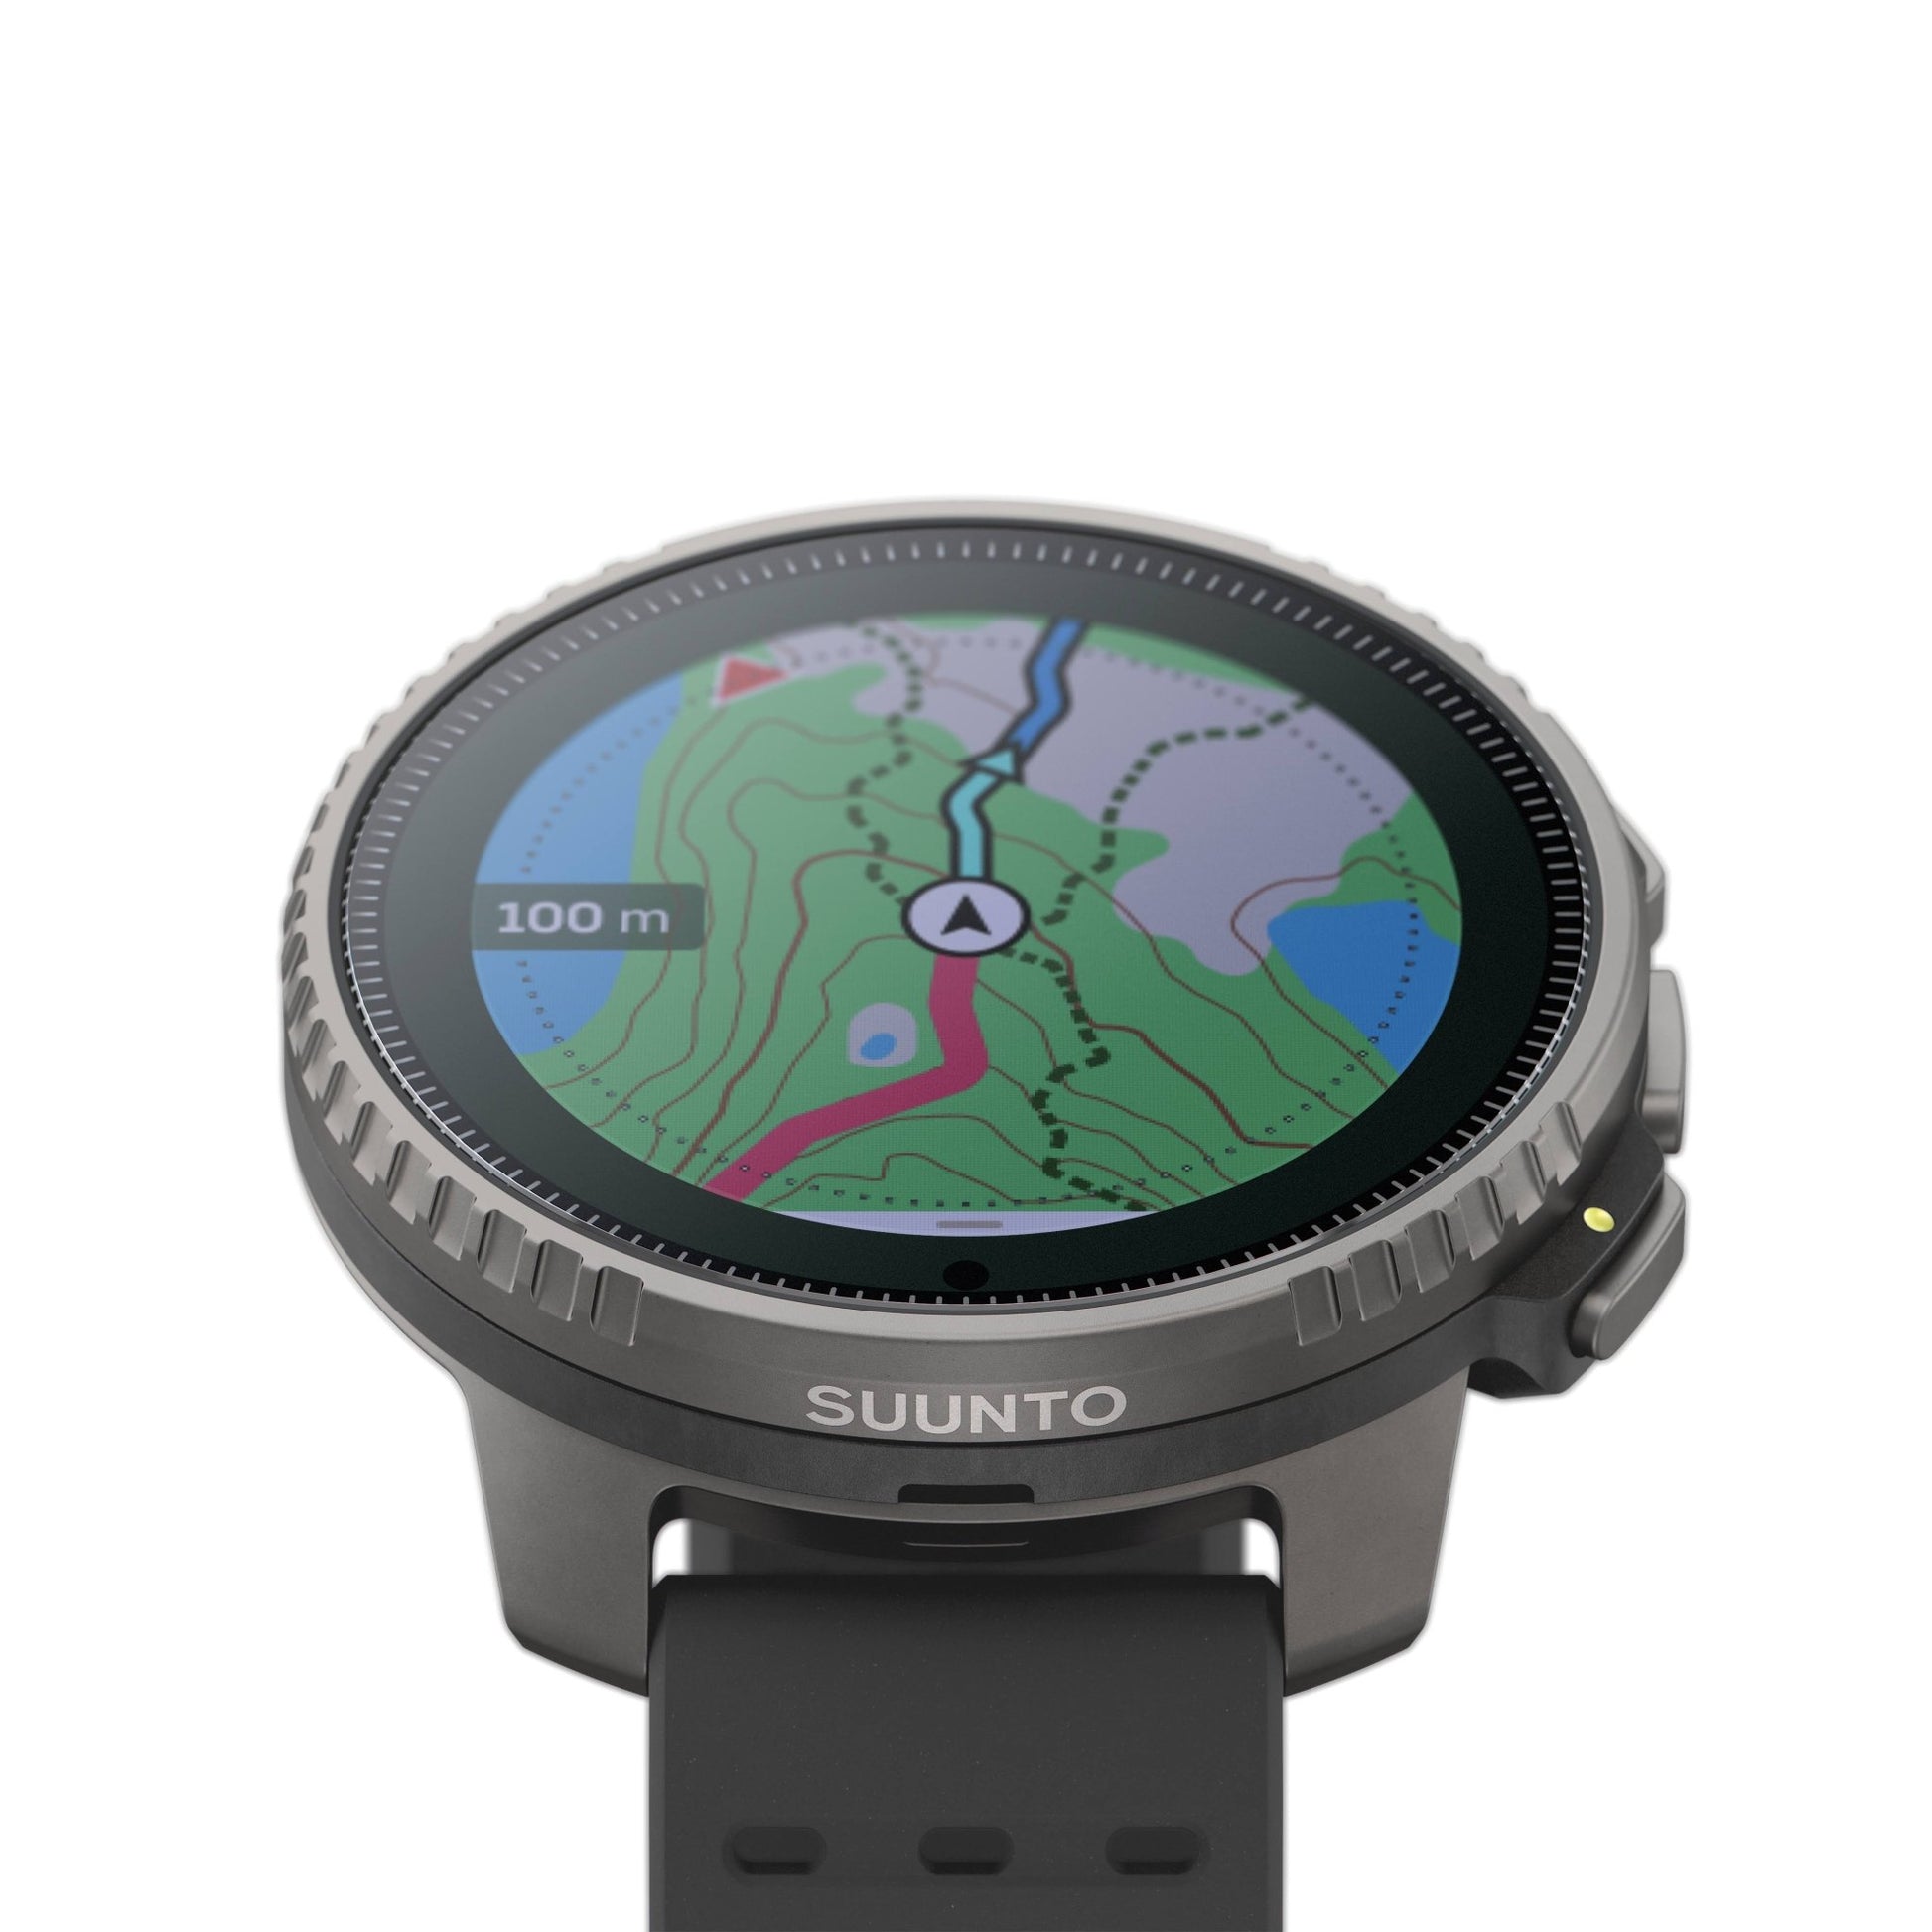  SUUNTO Vertical: Adventure GPS Watch, Large Screen